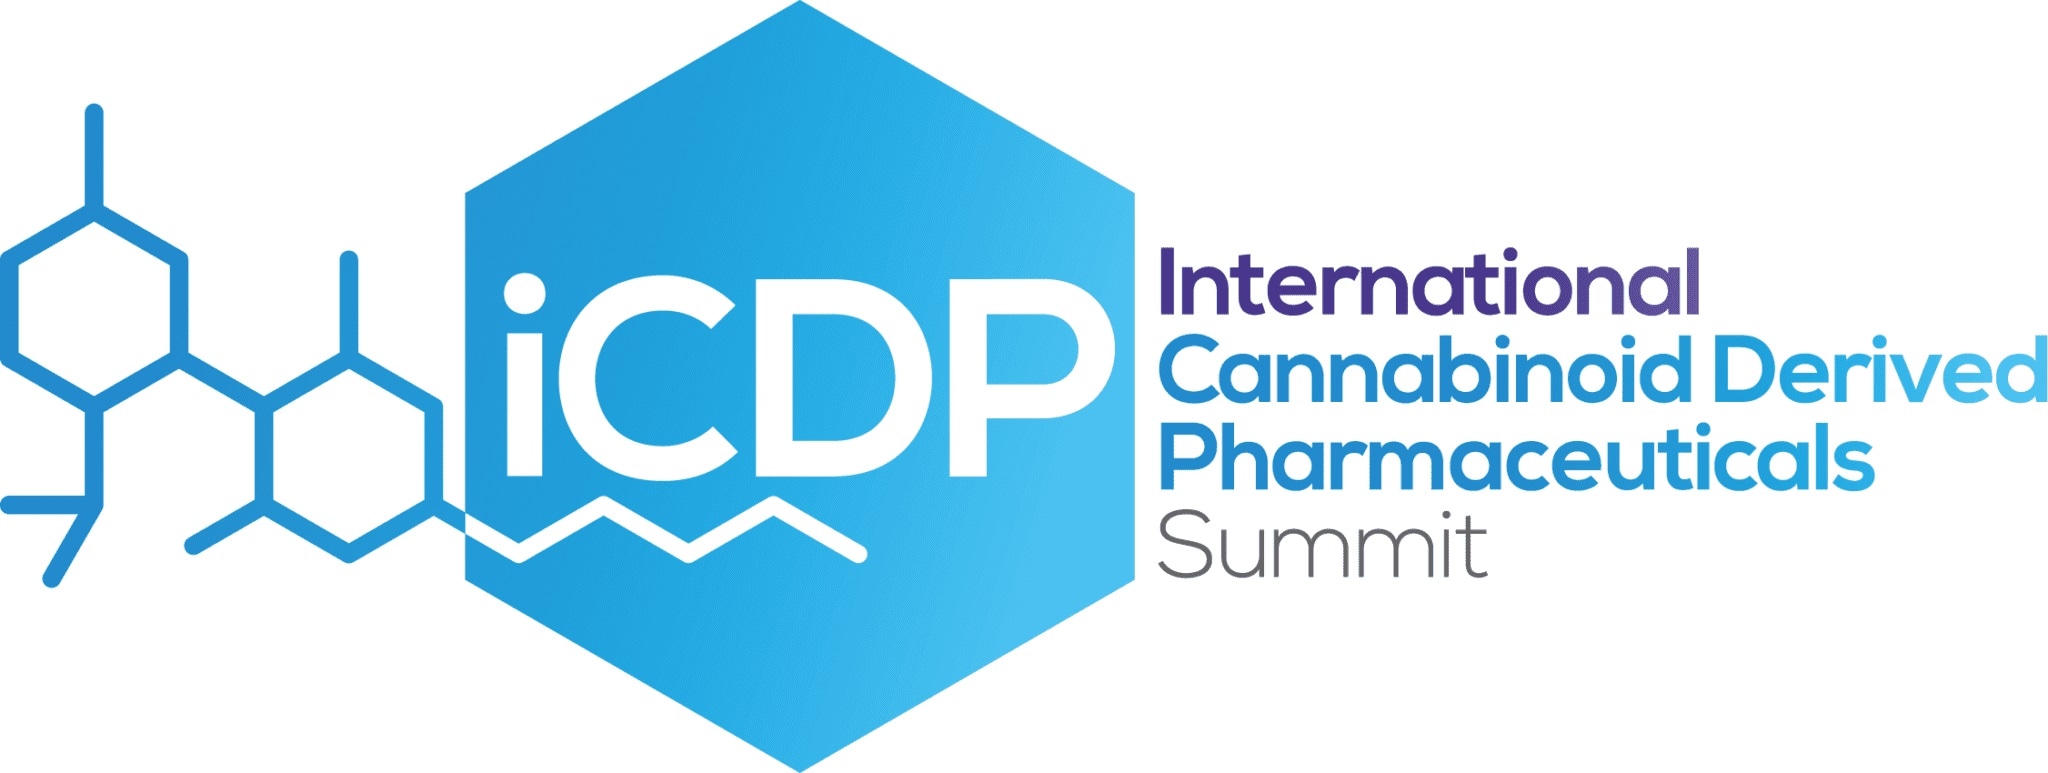 International Cannabinoid Derived Pharmaceuticals Summit